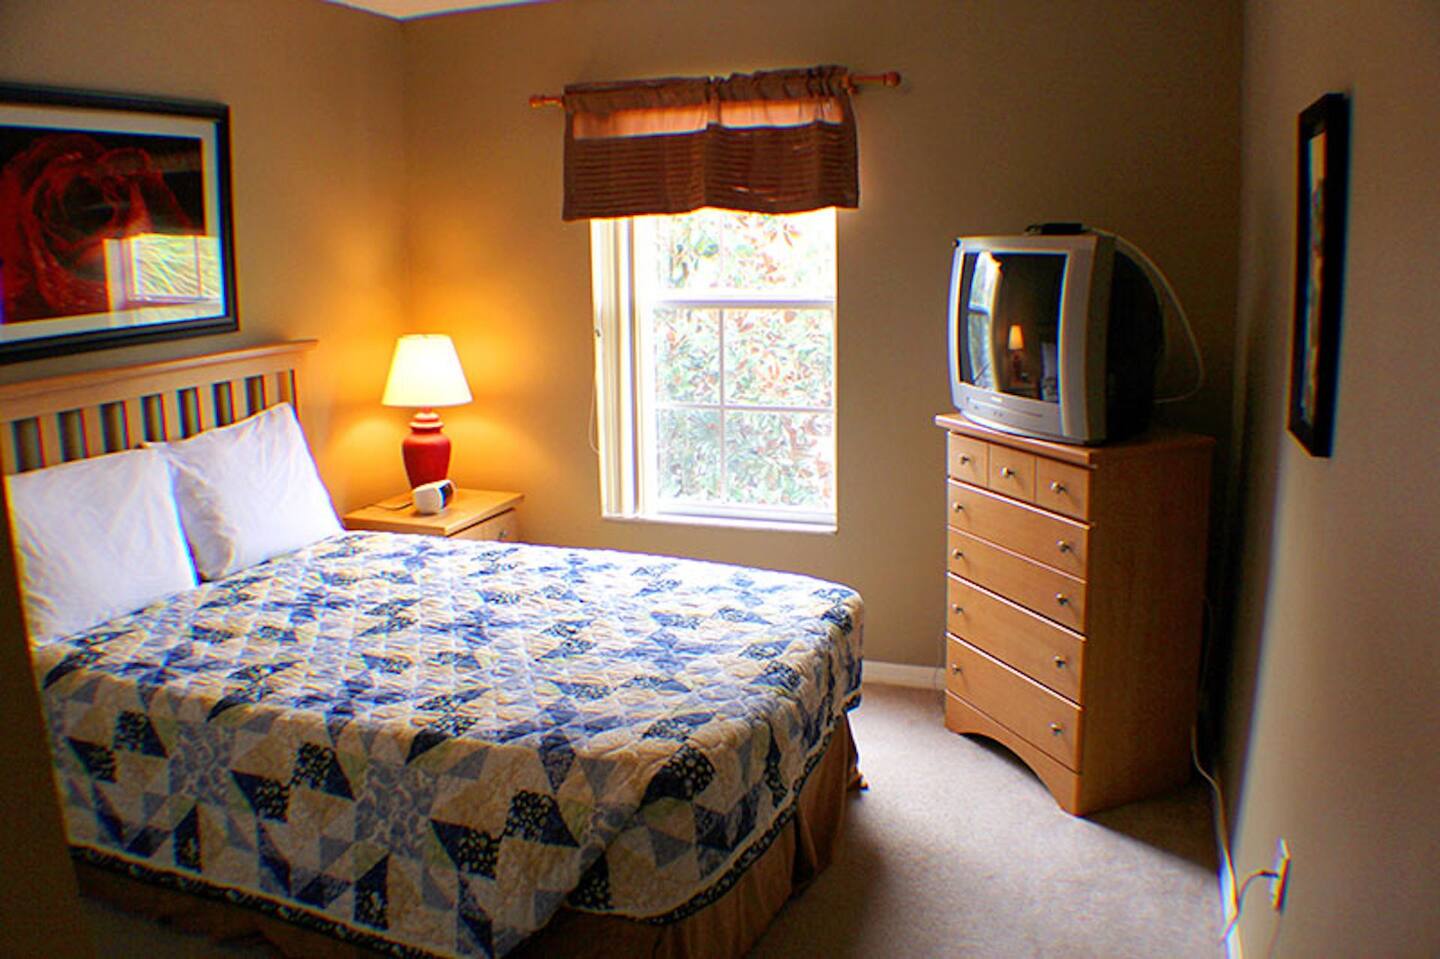 3 bedroom orlando vacation home near disney bedroom three